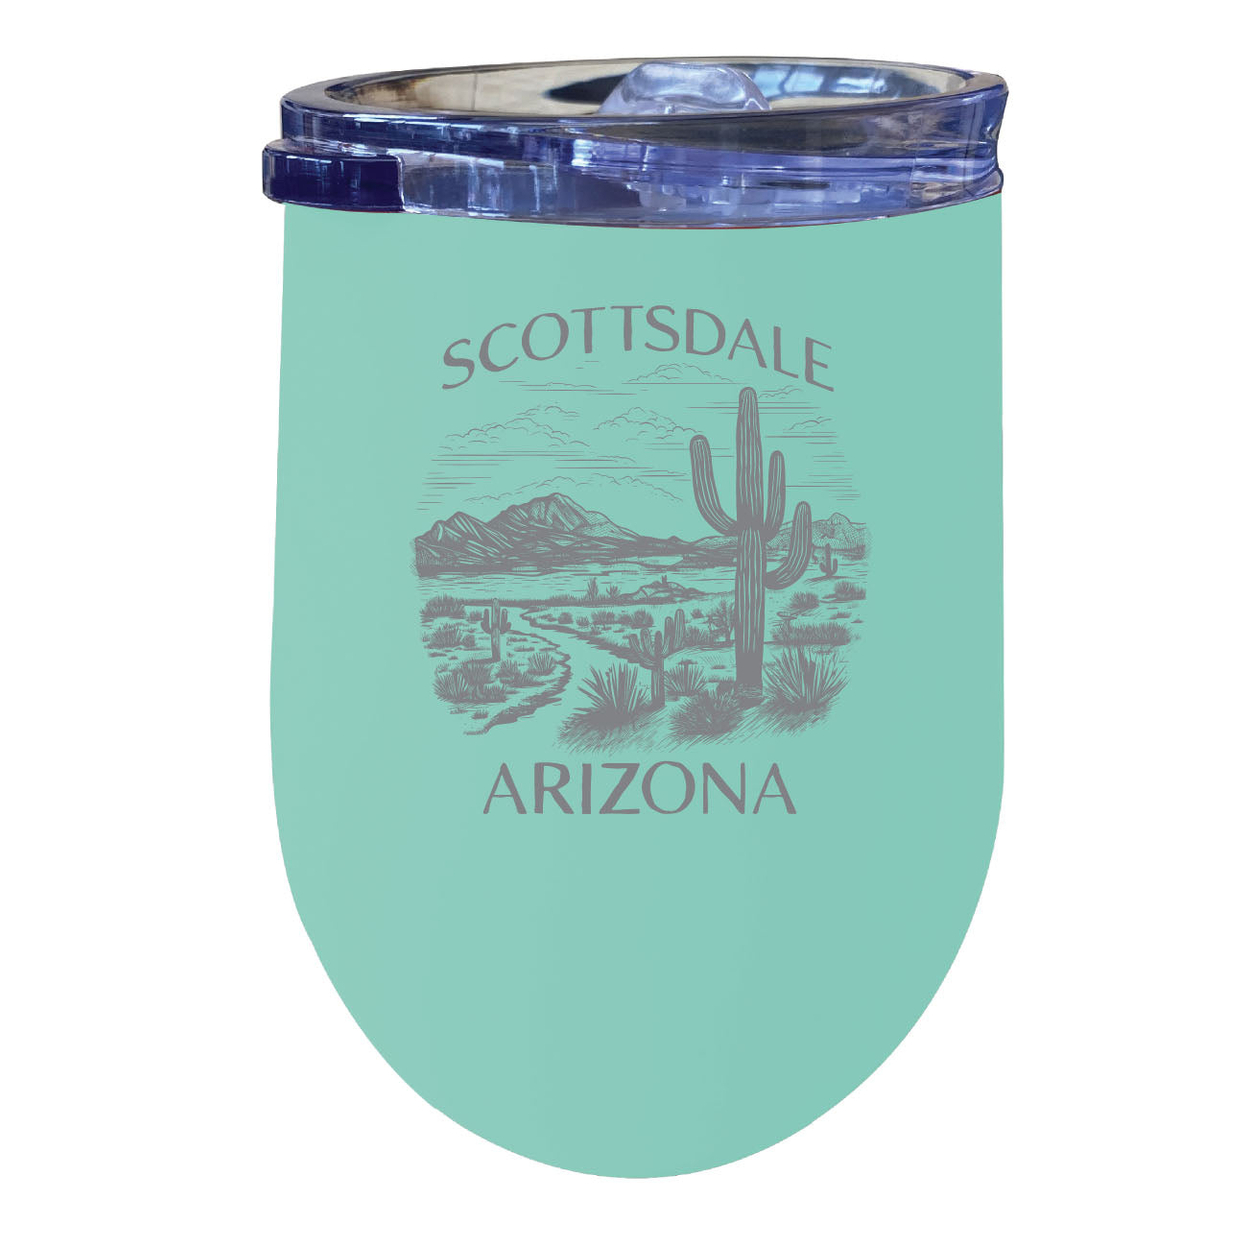 Scottsdale Arizona Souvenir 12 Oz Engraved Insulated Wine Stainless Steel Tumbler - Navy,,Single Unit